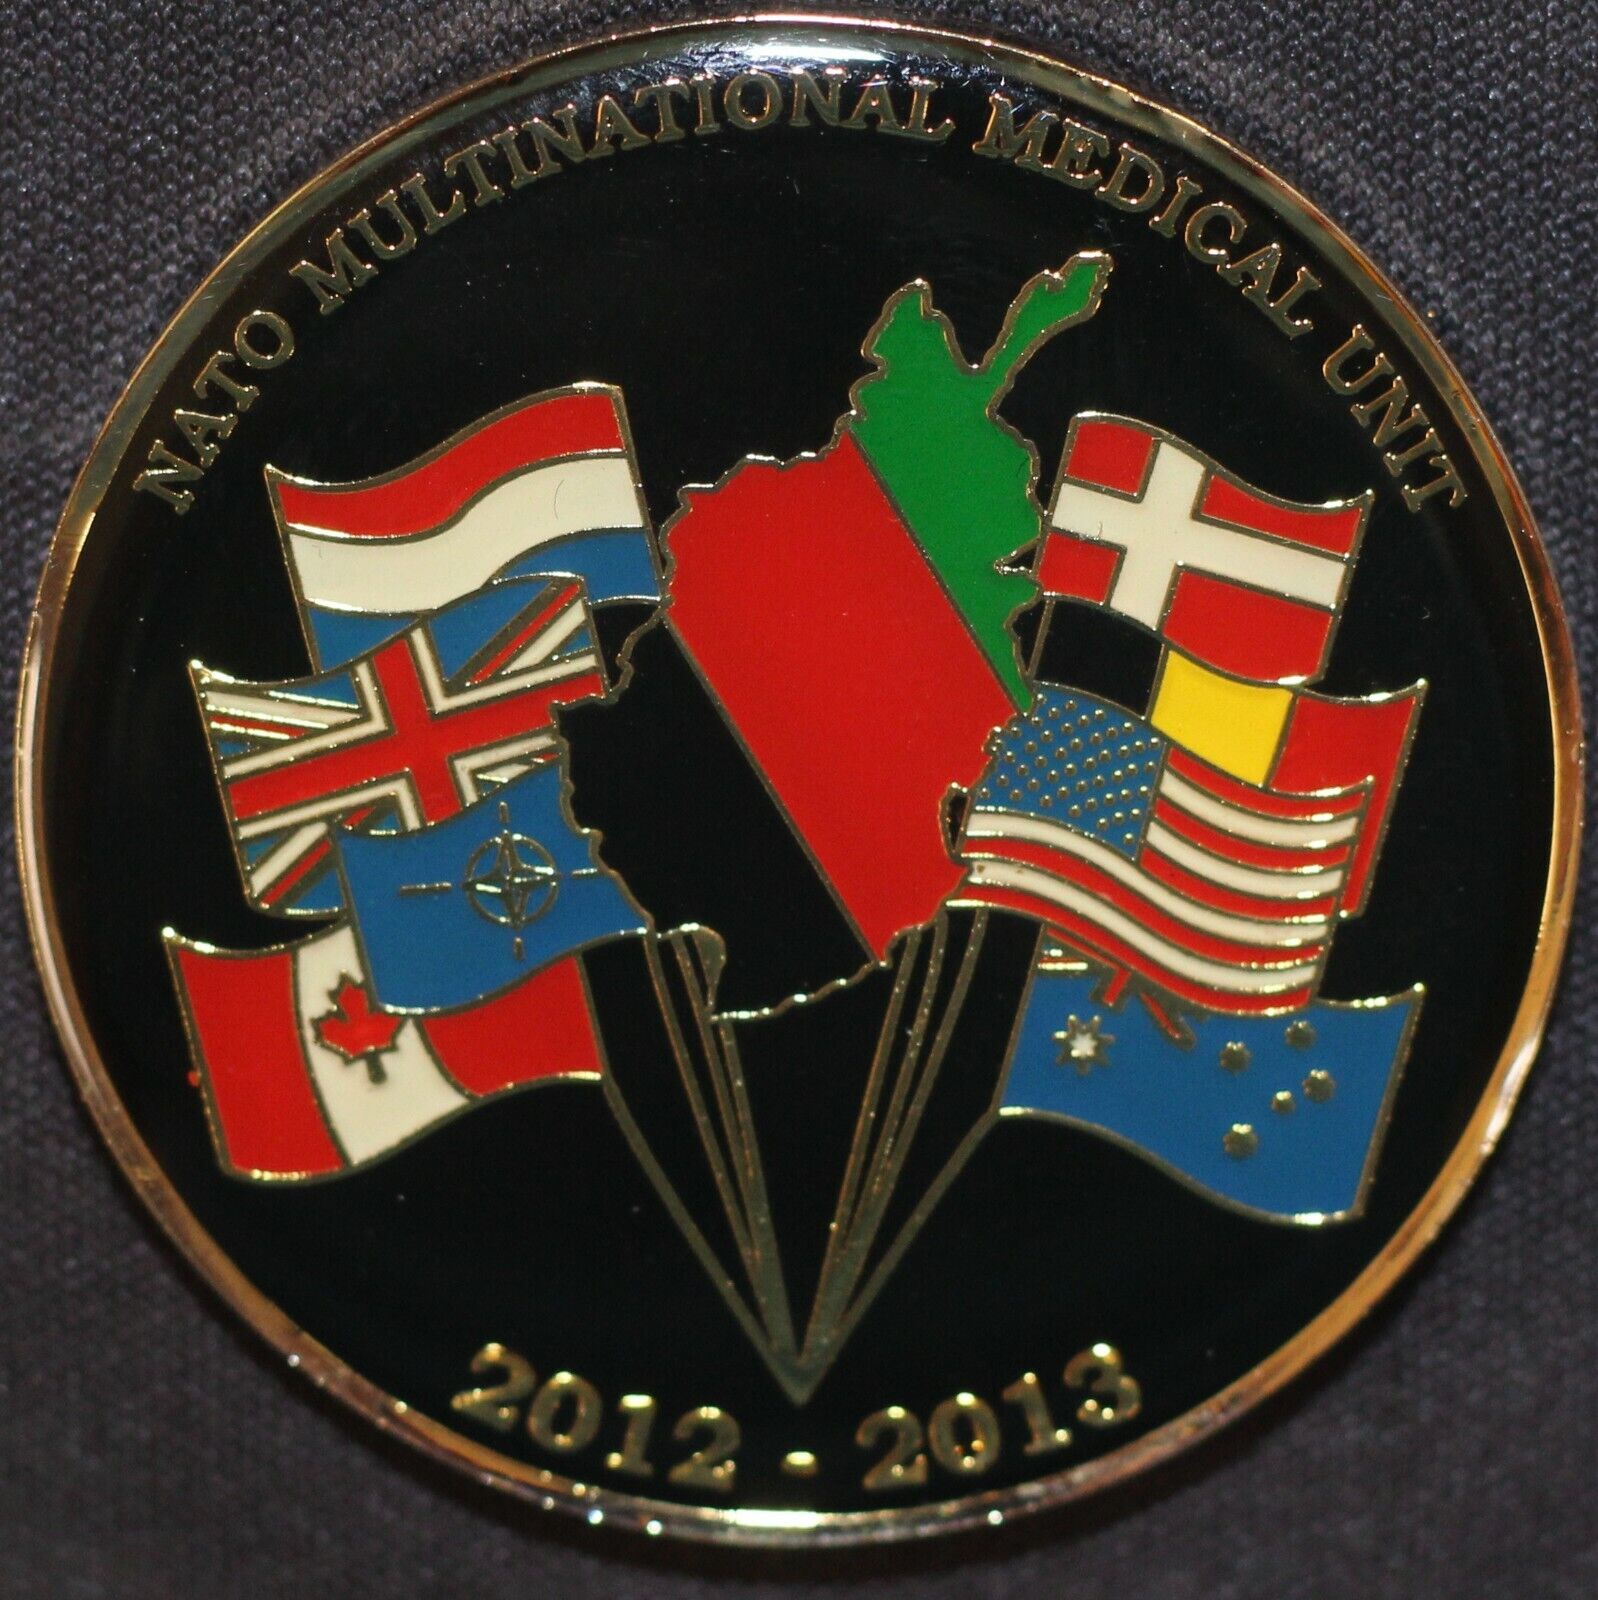 NATO MultiNational Medical Unit Role 3 Kandahar Flags 2012 2013 Challenge Coin 